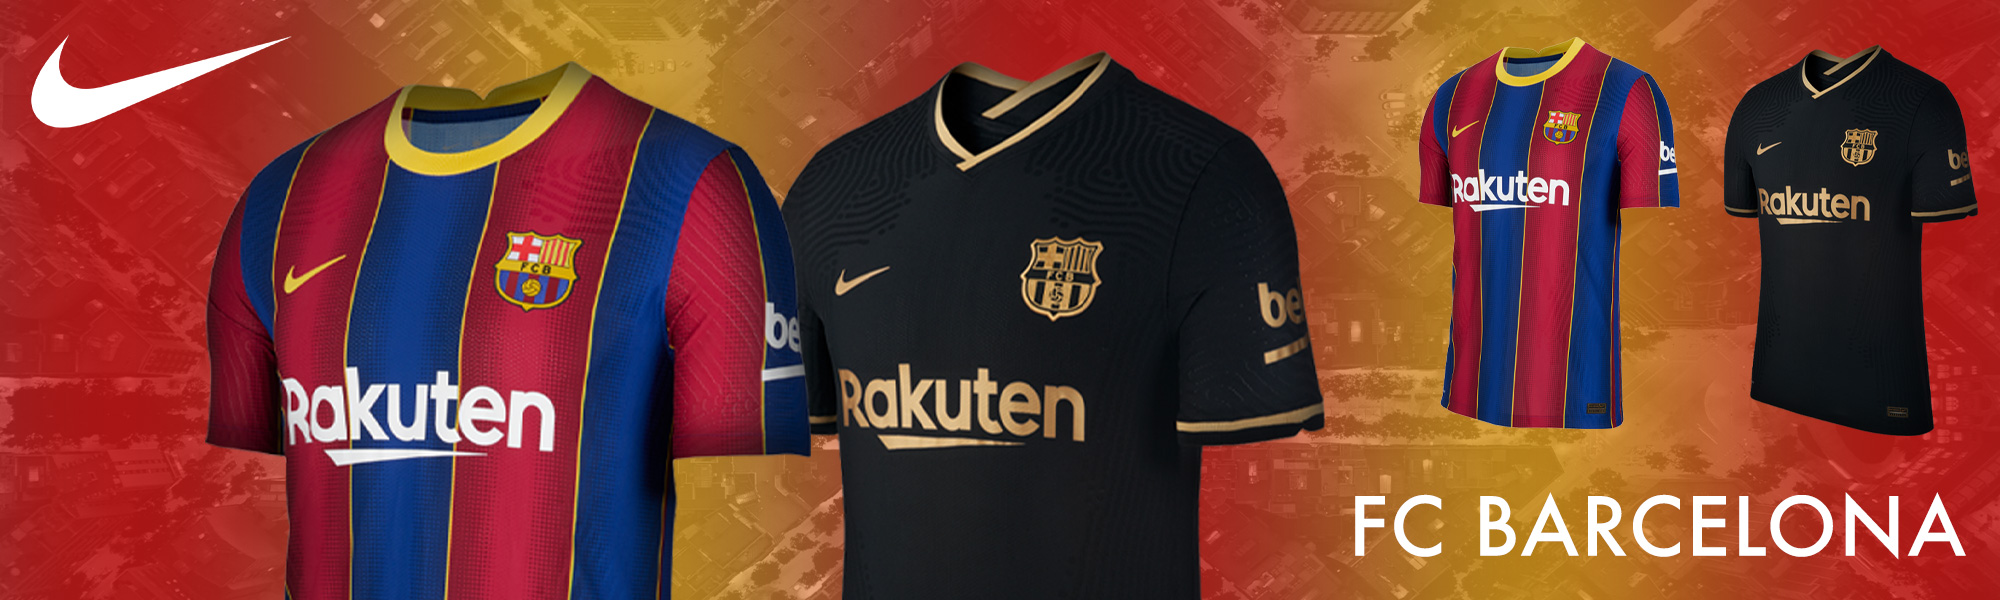 barcelona jersey 2019 price